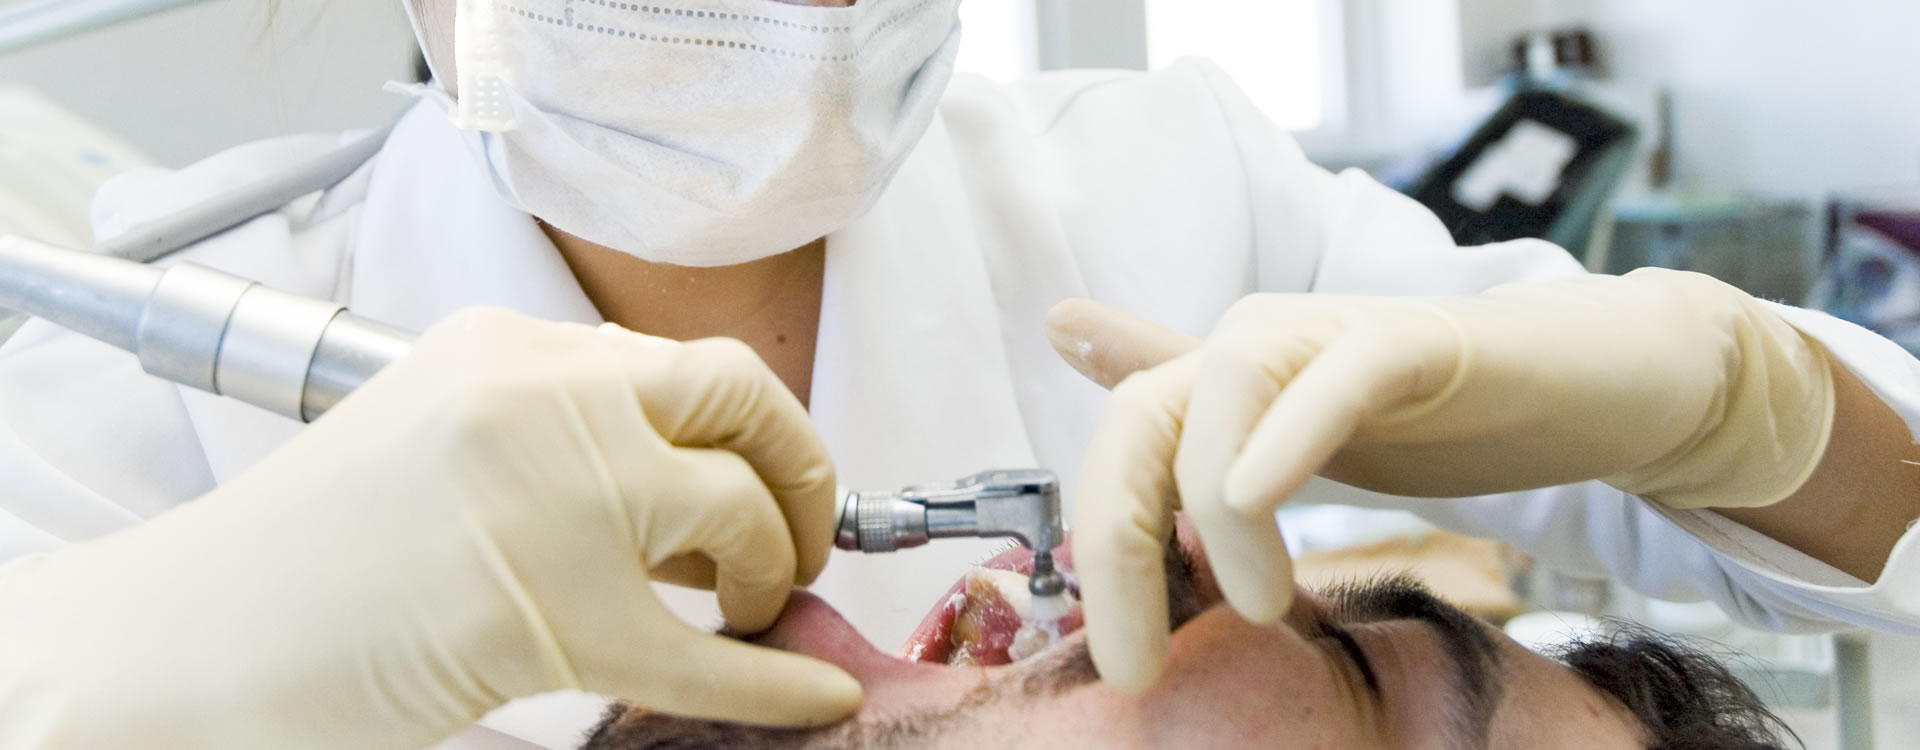 The myth of holistic dentistry